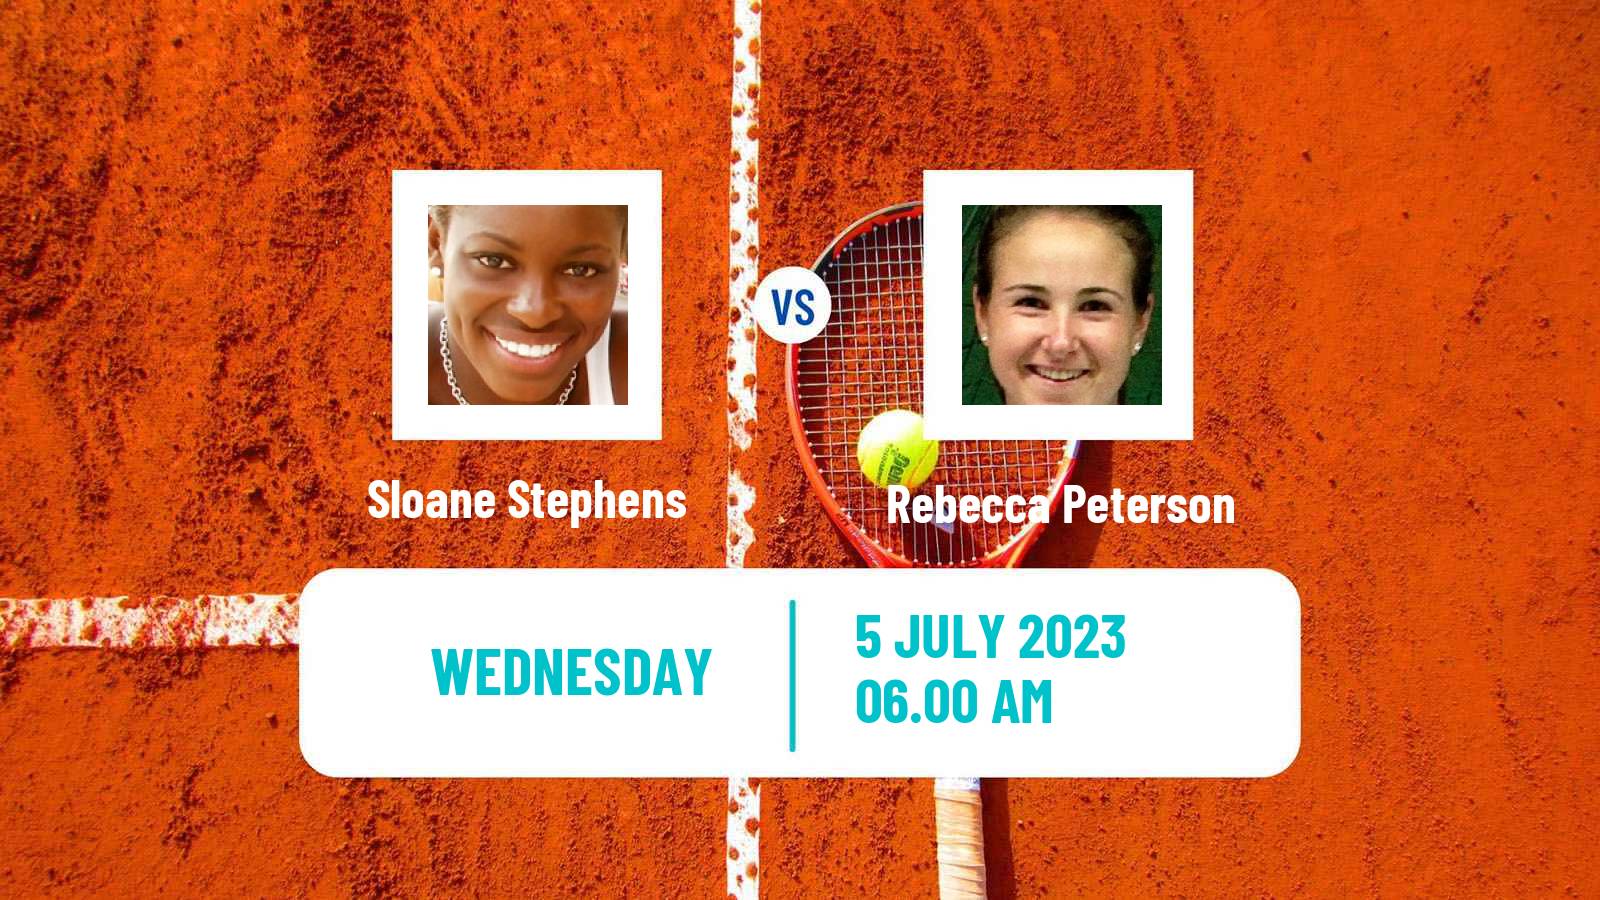 Tennis WTA Wimbledon Sloane Stephens - Rebecca Peterson